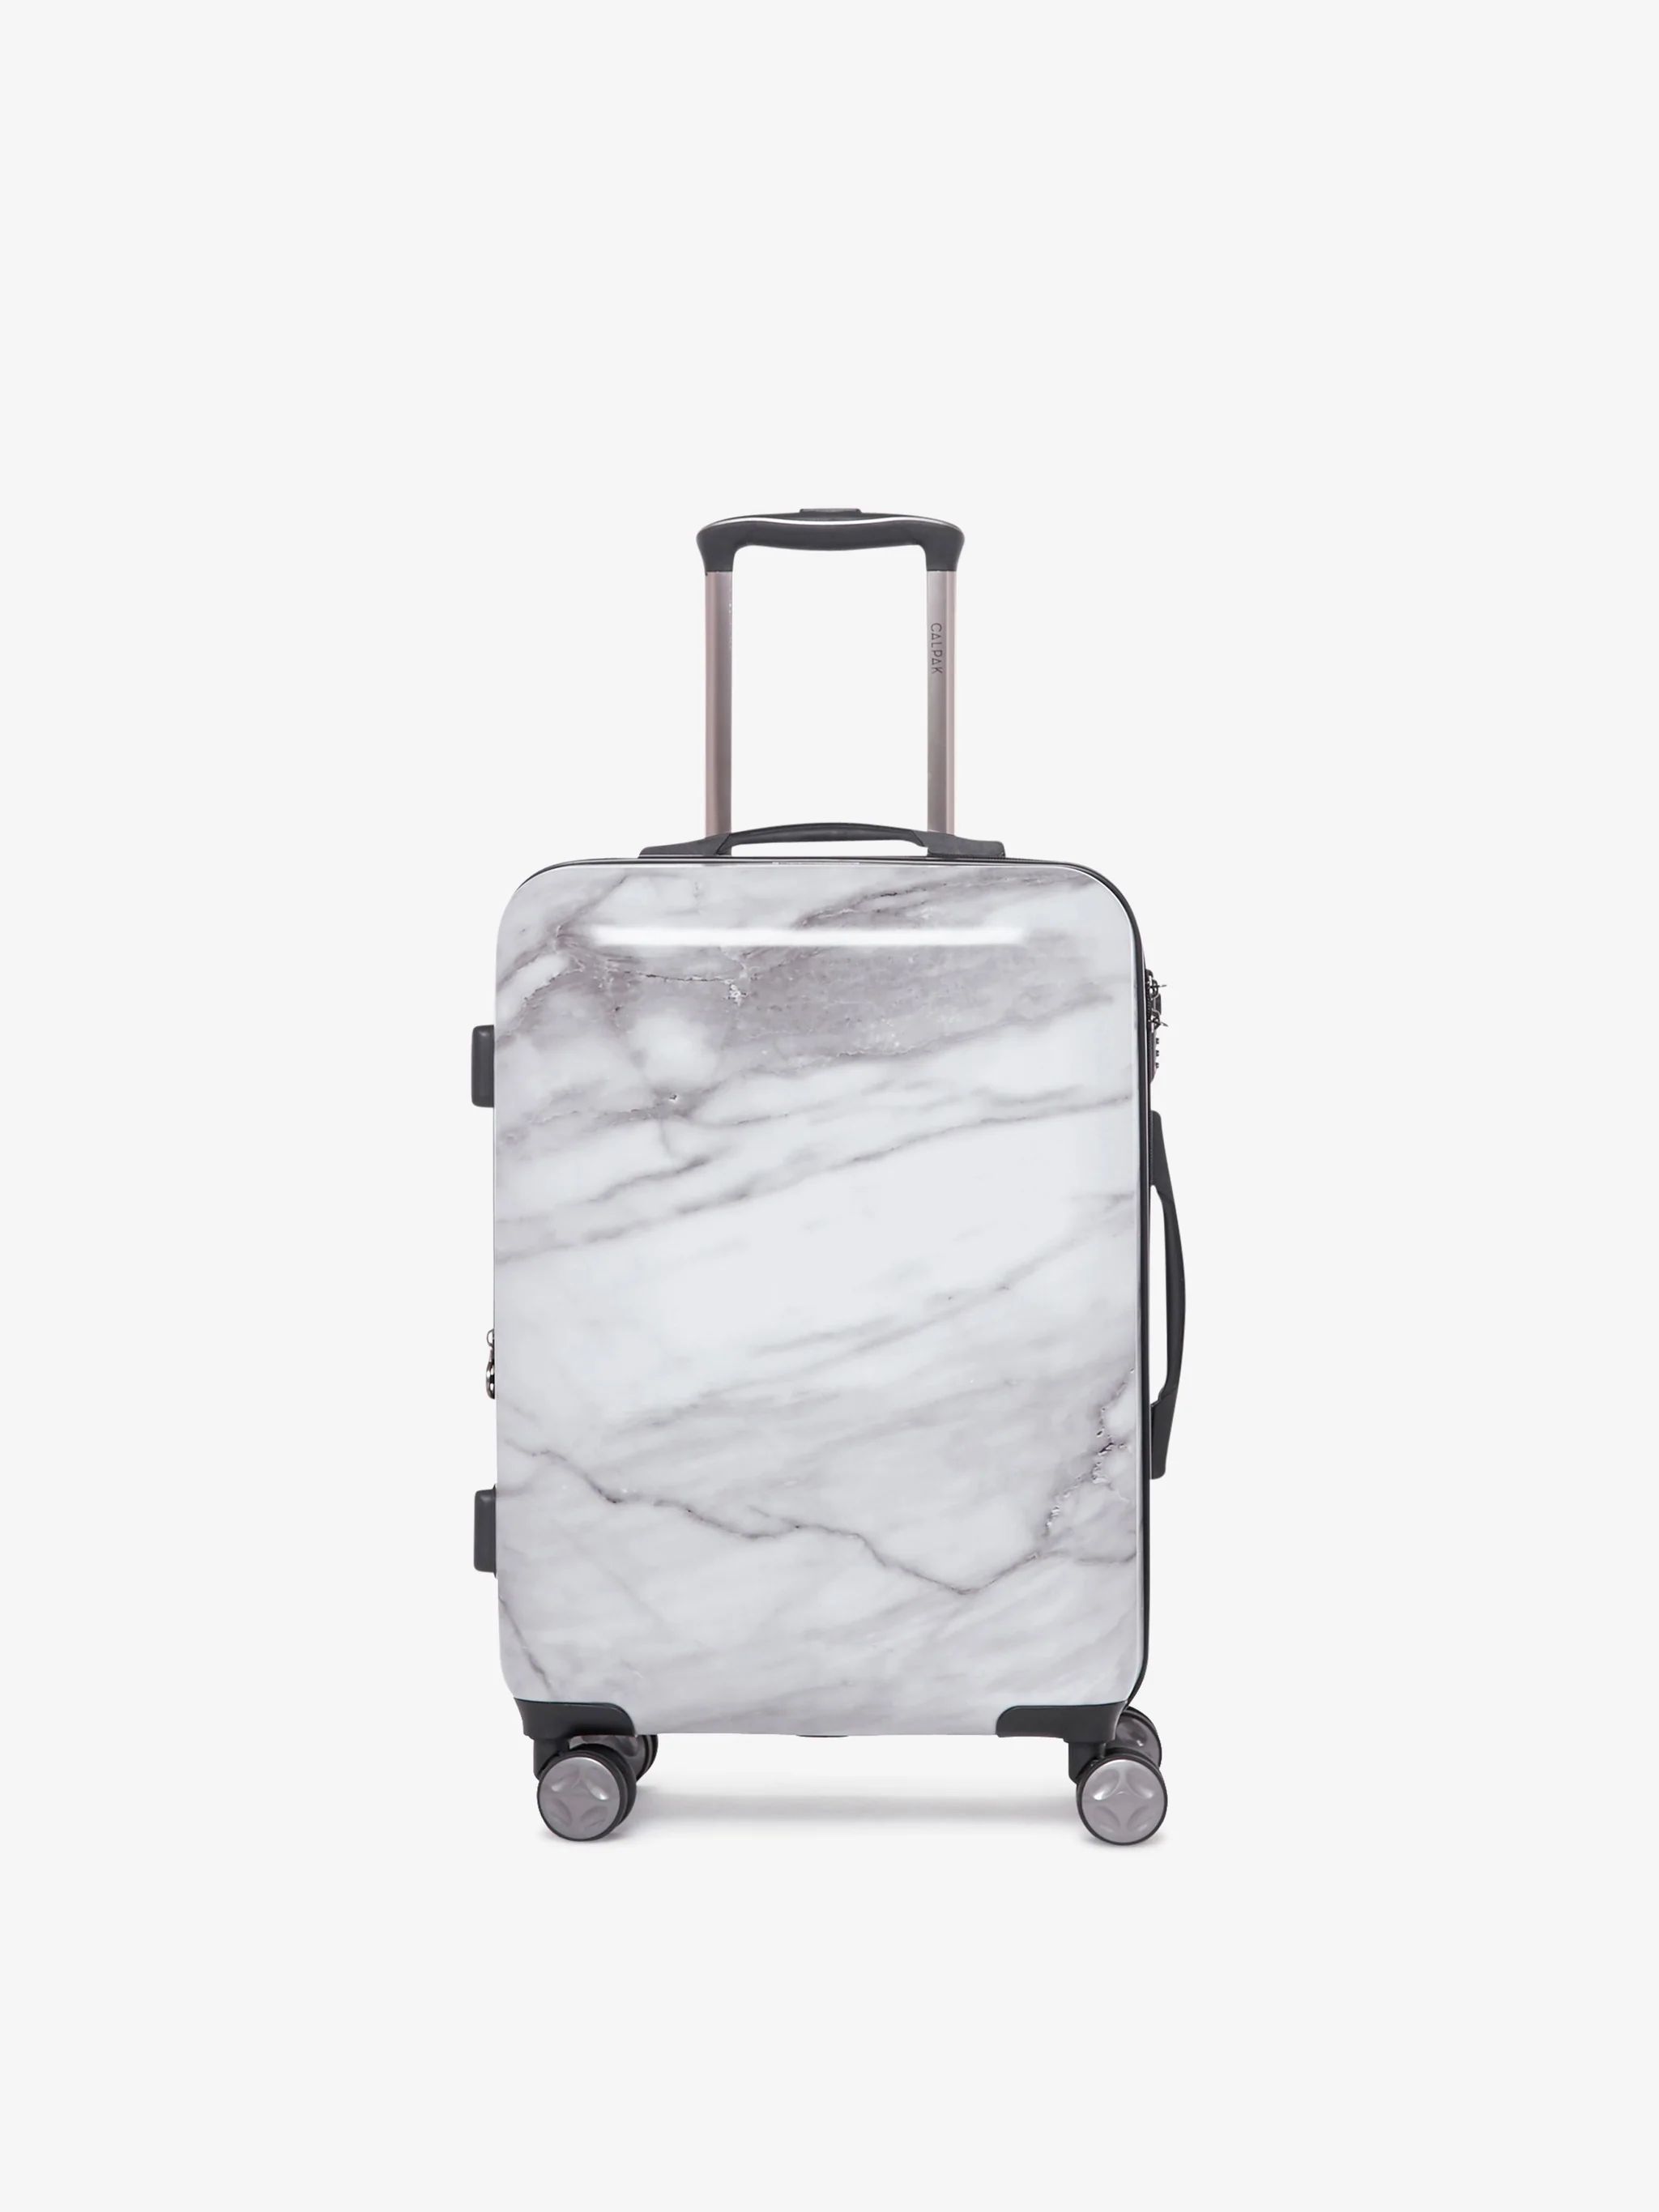 Astyll 2-Piece Luggage Set | CALPAK Travel